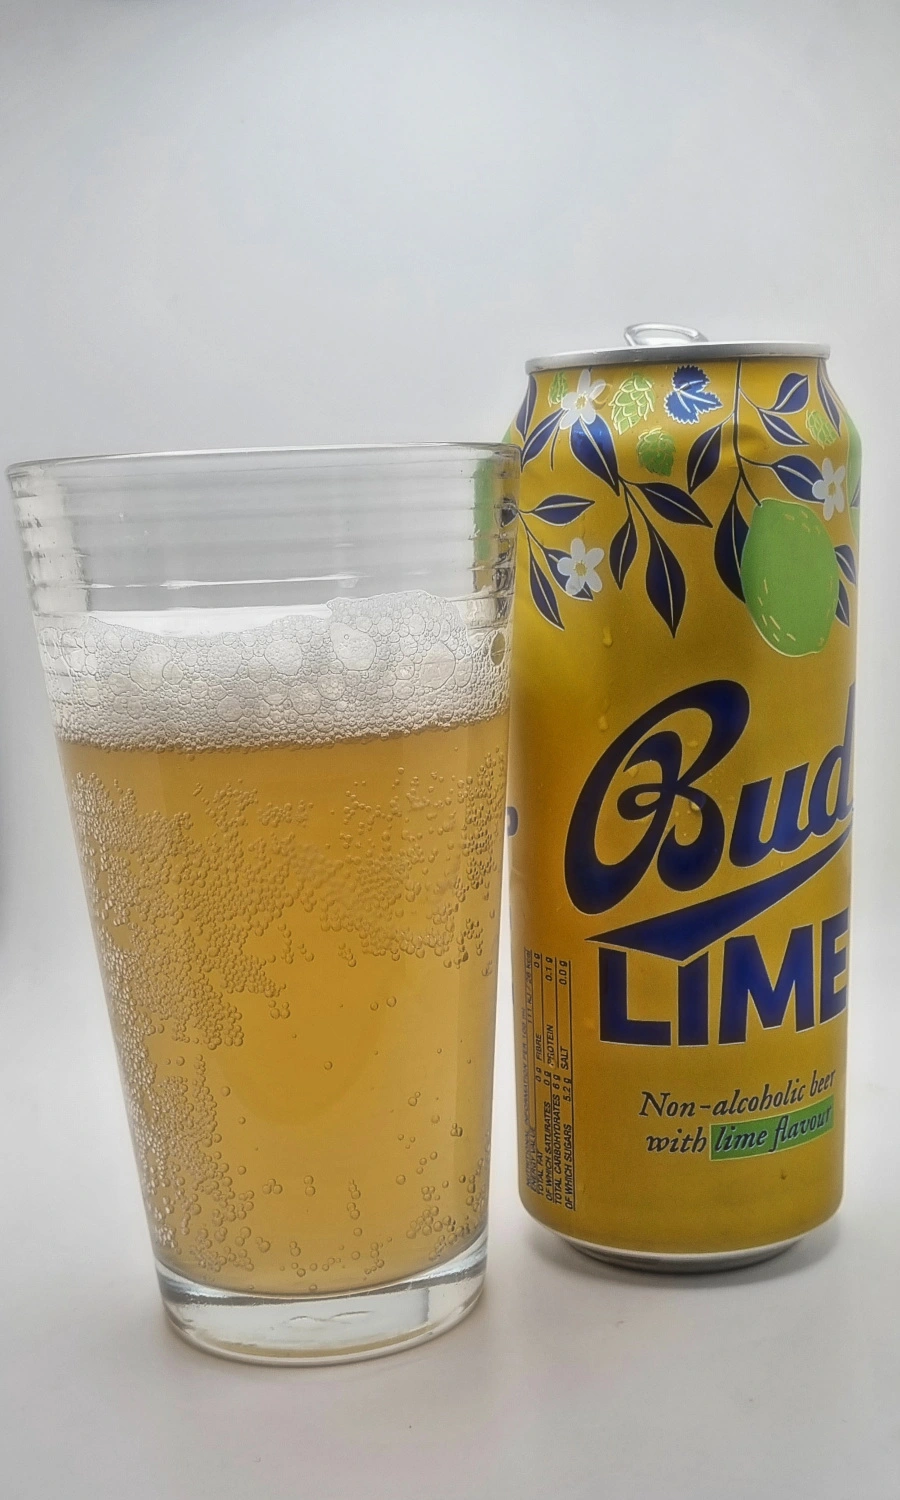 bud lime non-alcoholic